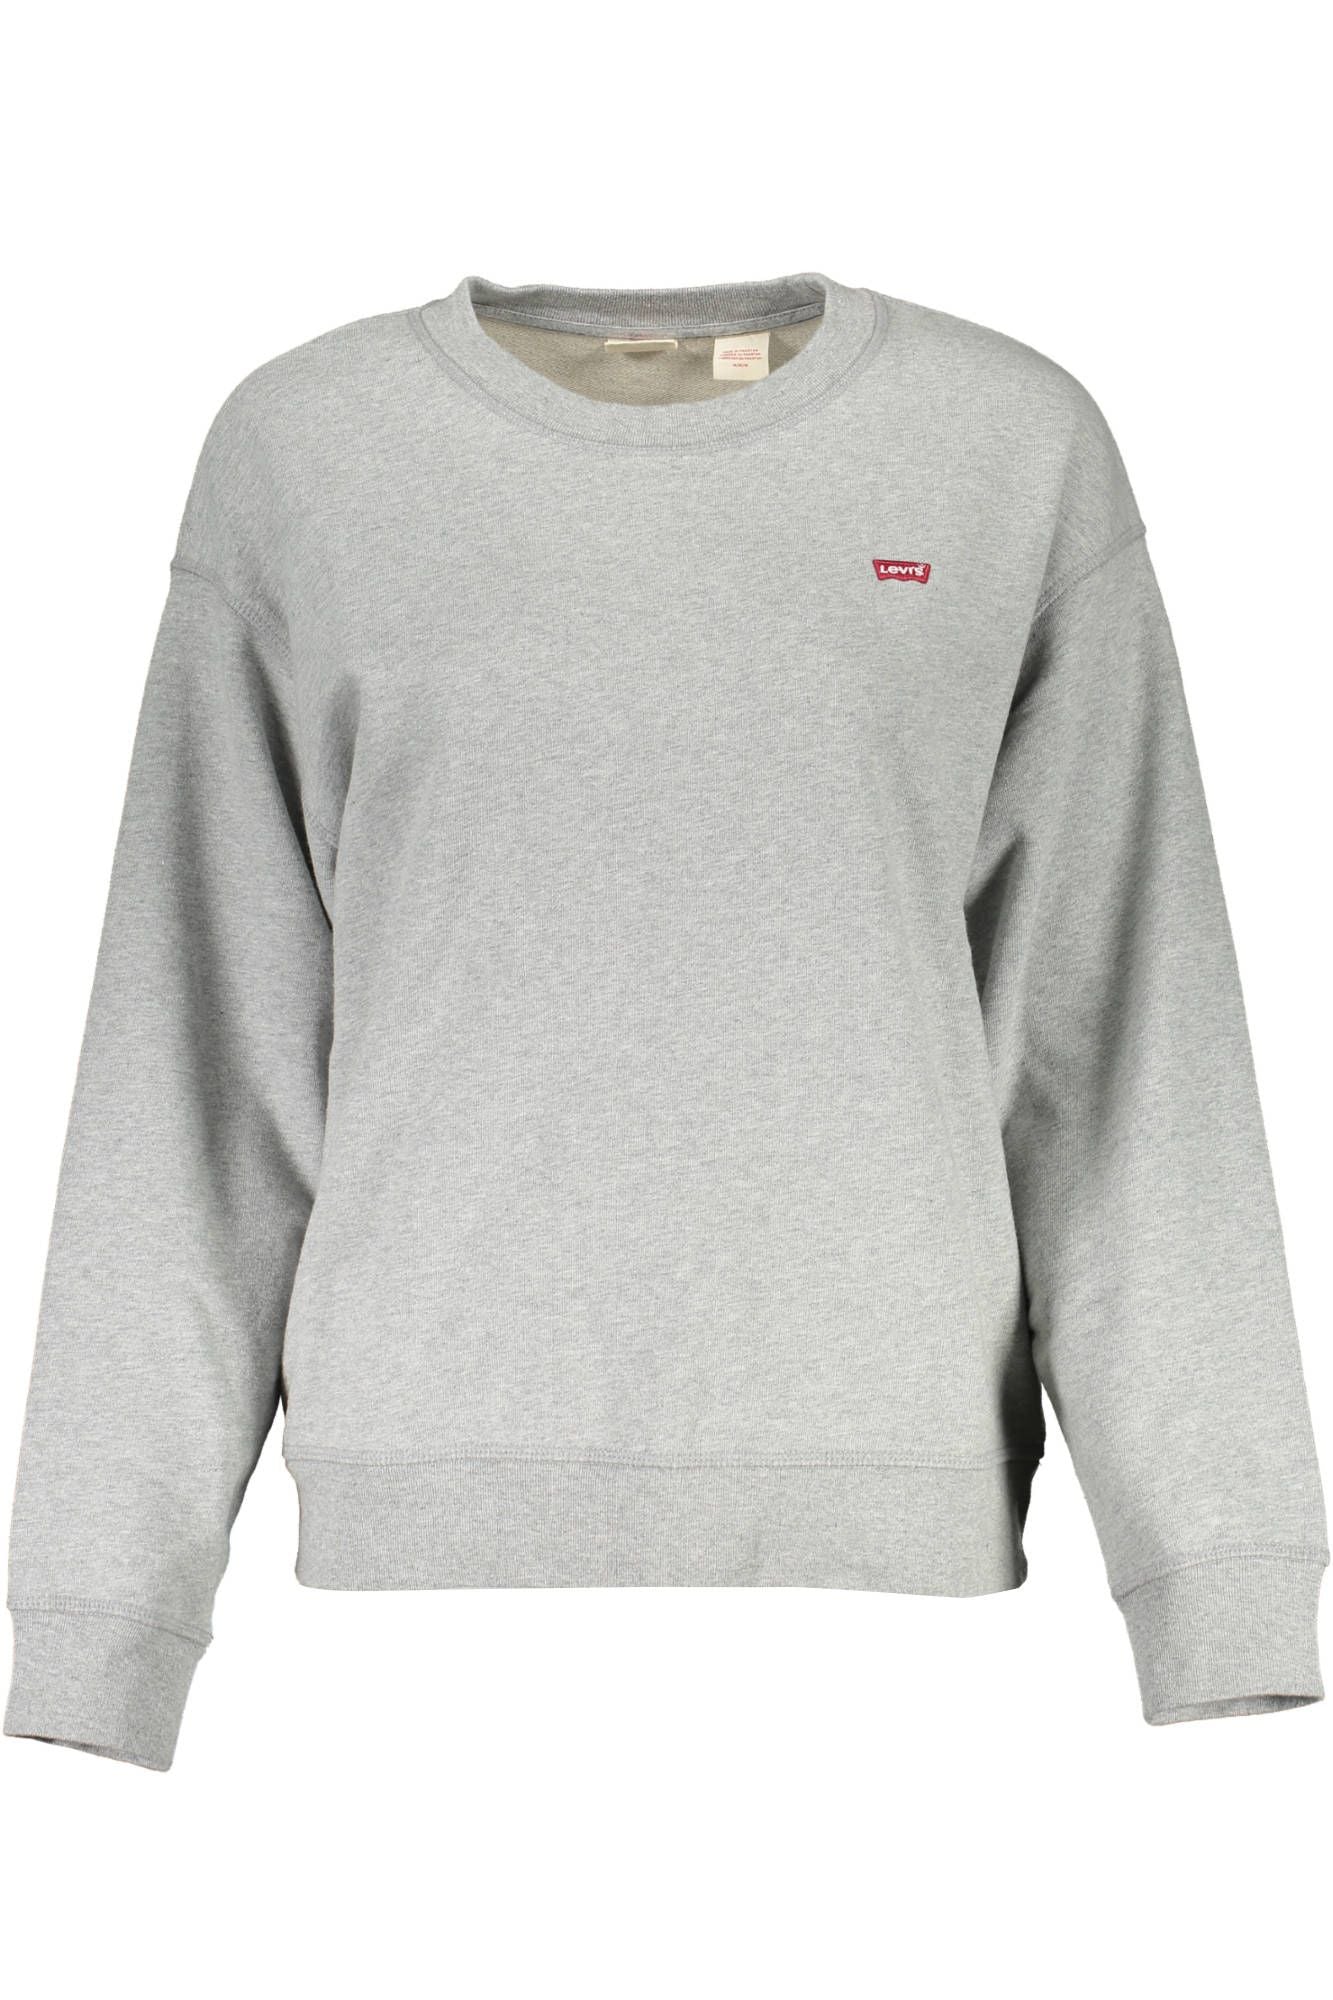 Levi'S Gray Cotton Sweater